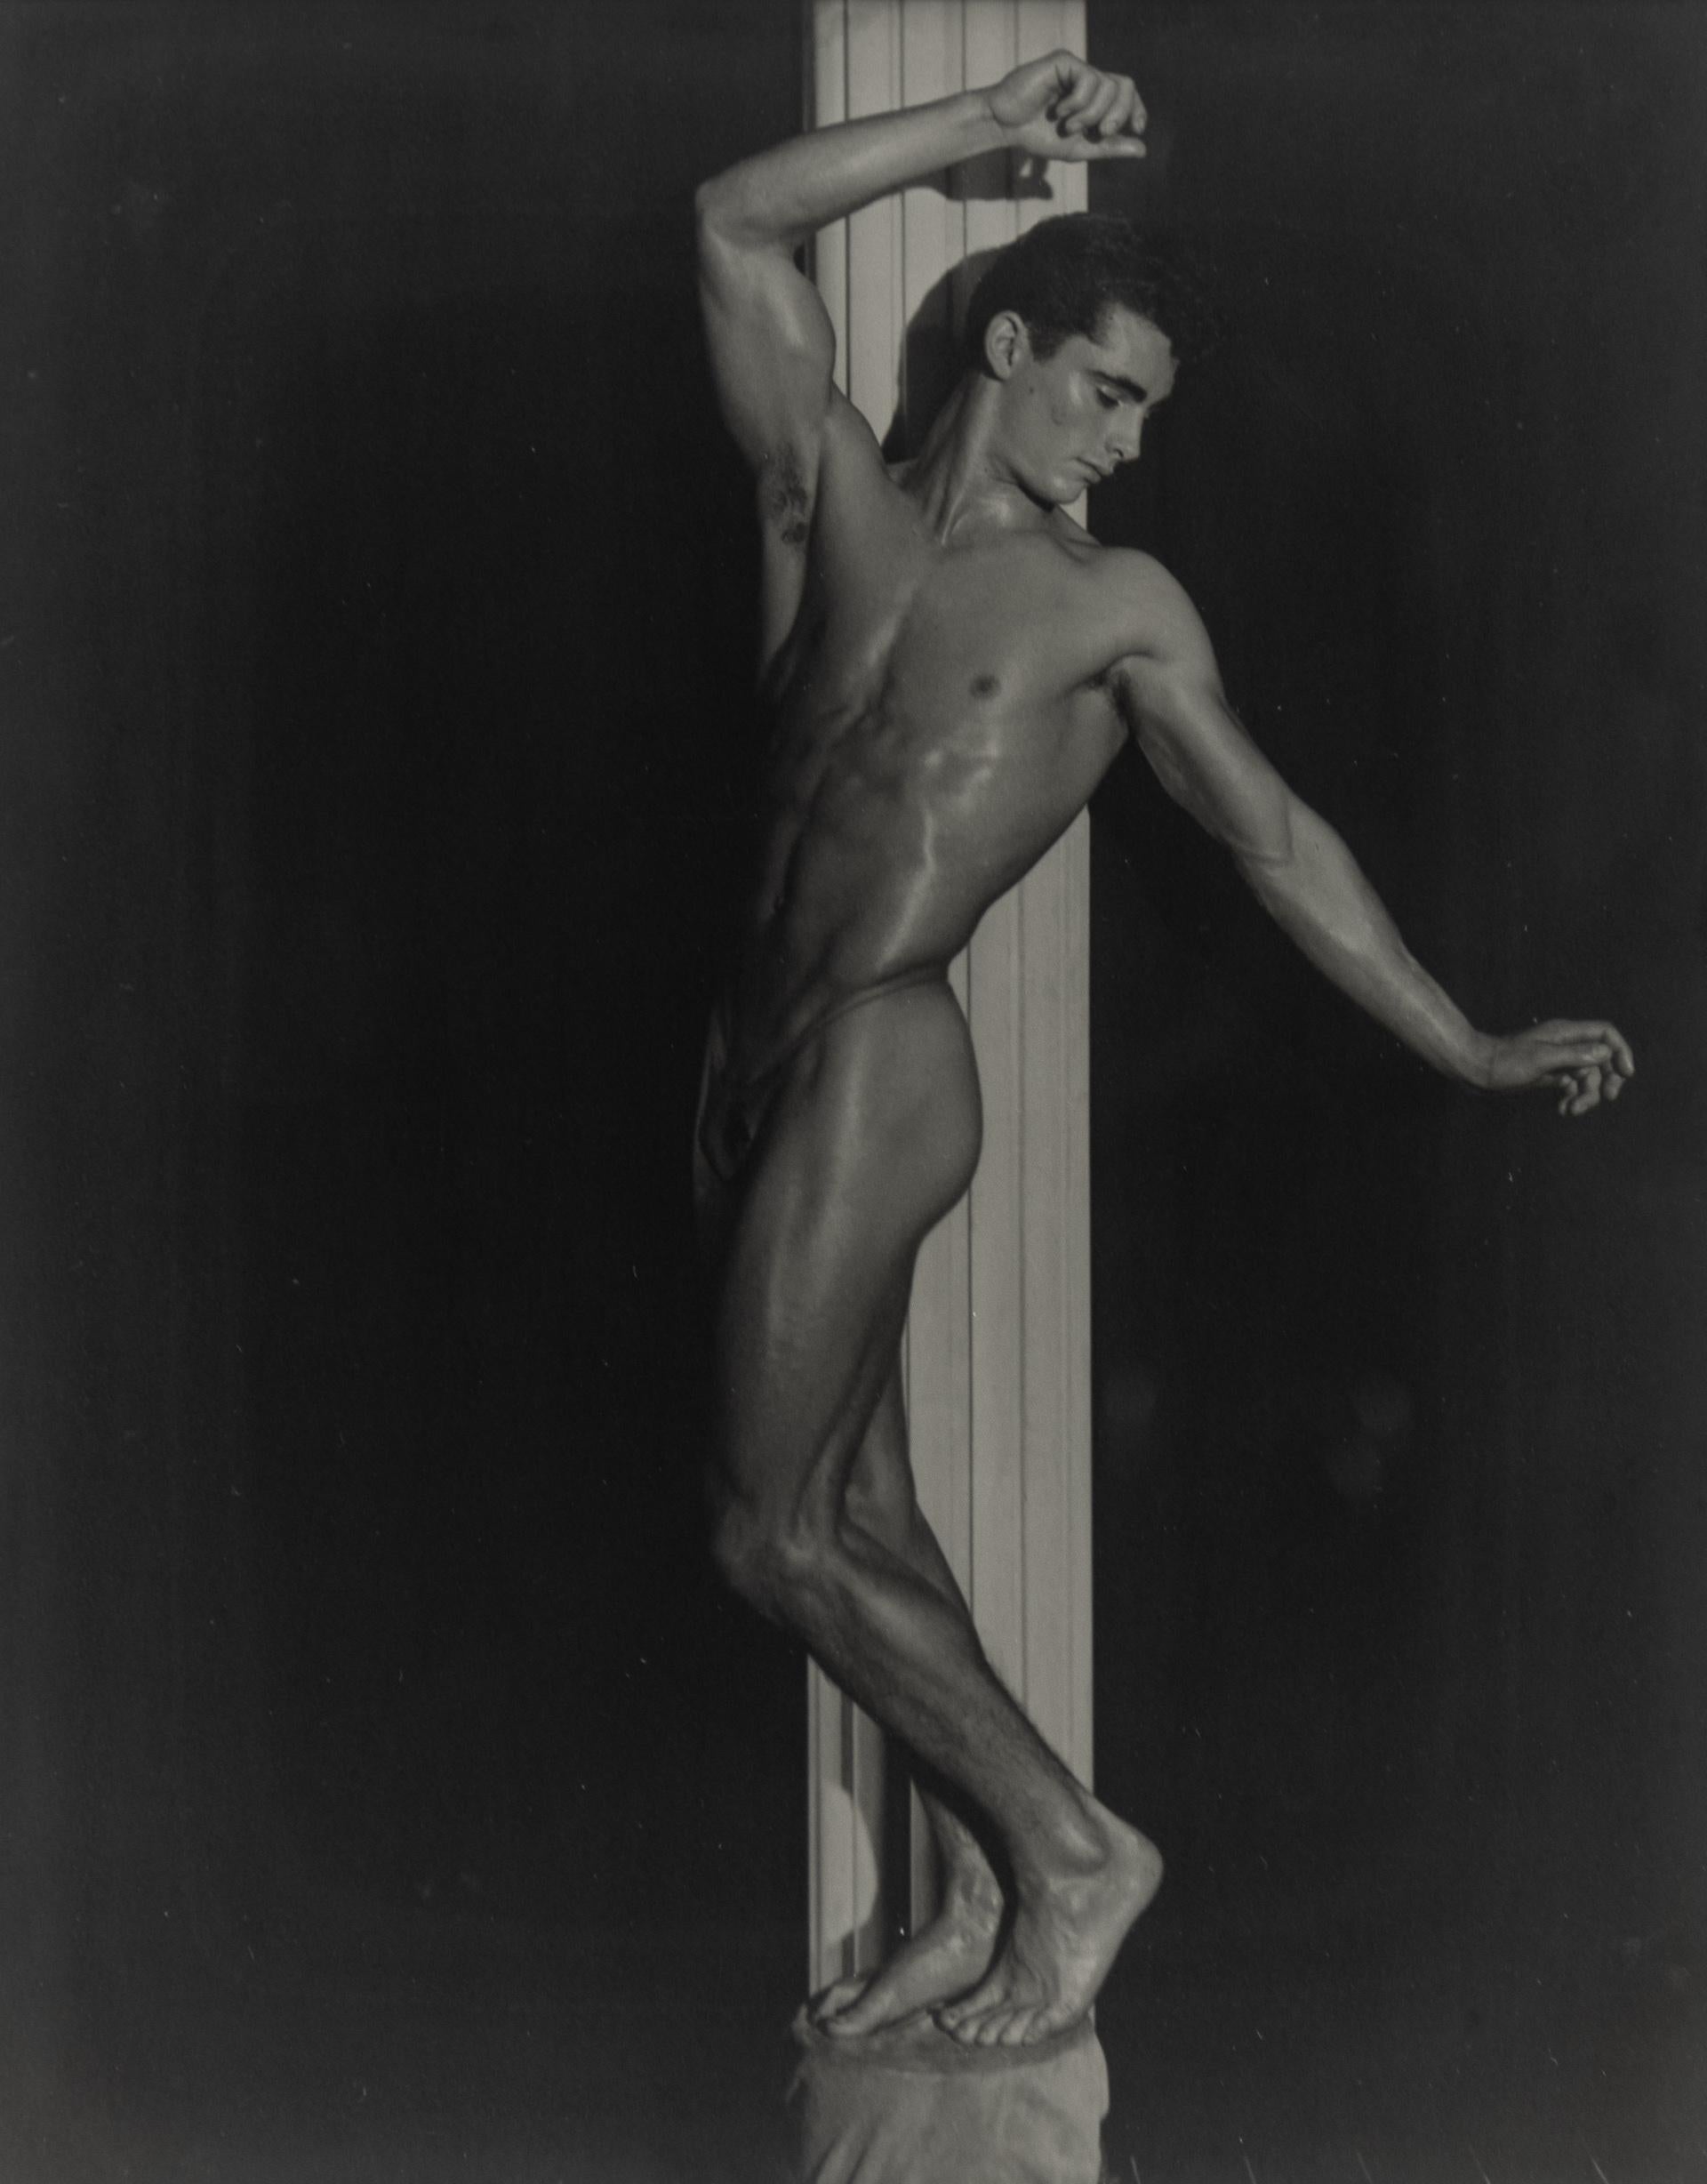 Bob Mizer Nude Photograph – Forrester Millard, Alter 21